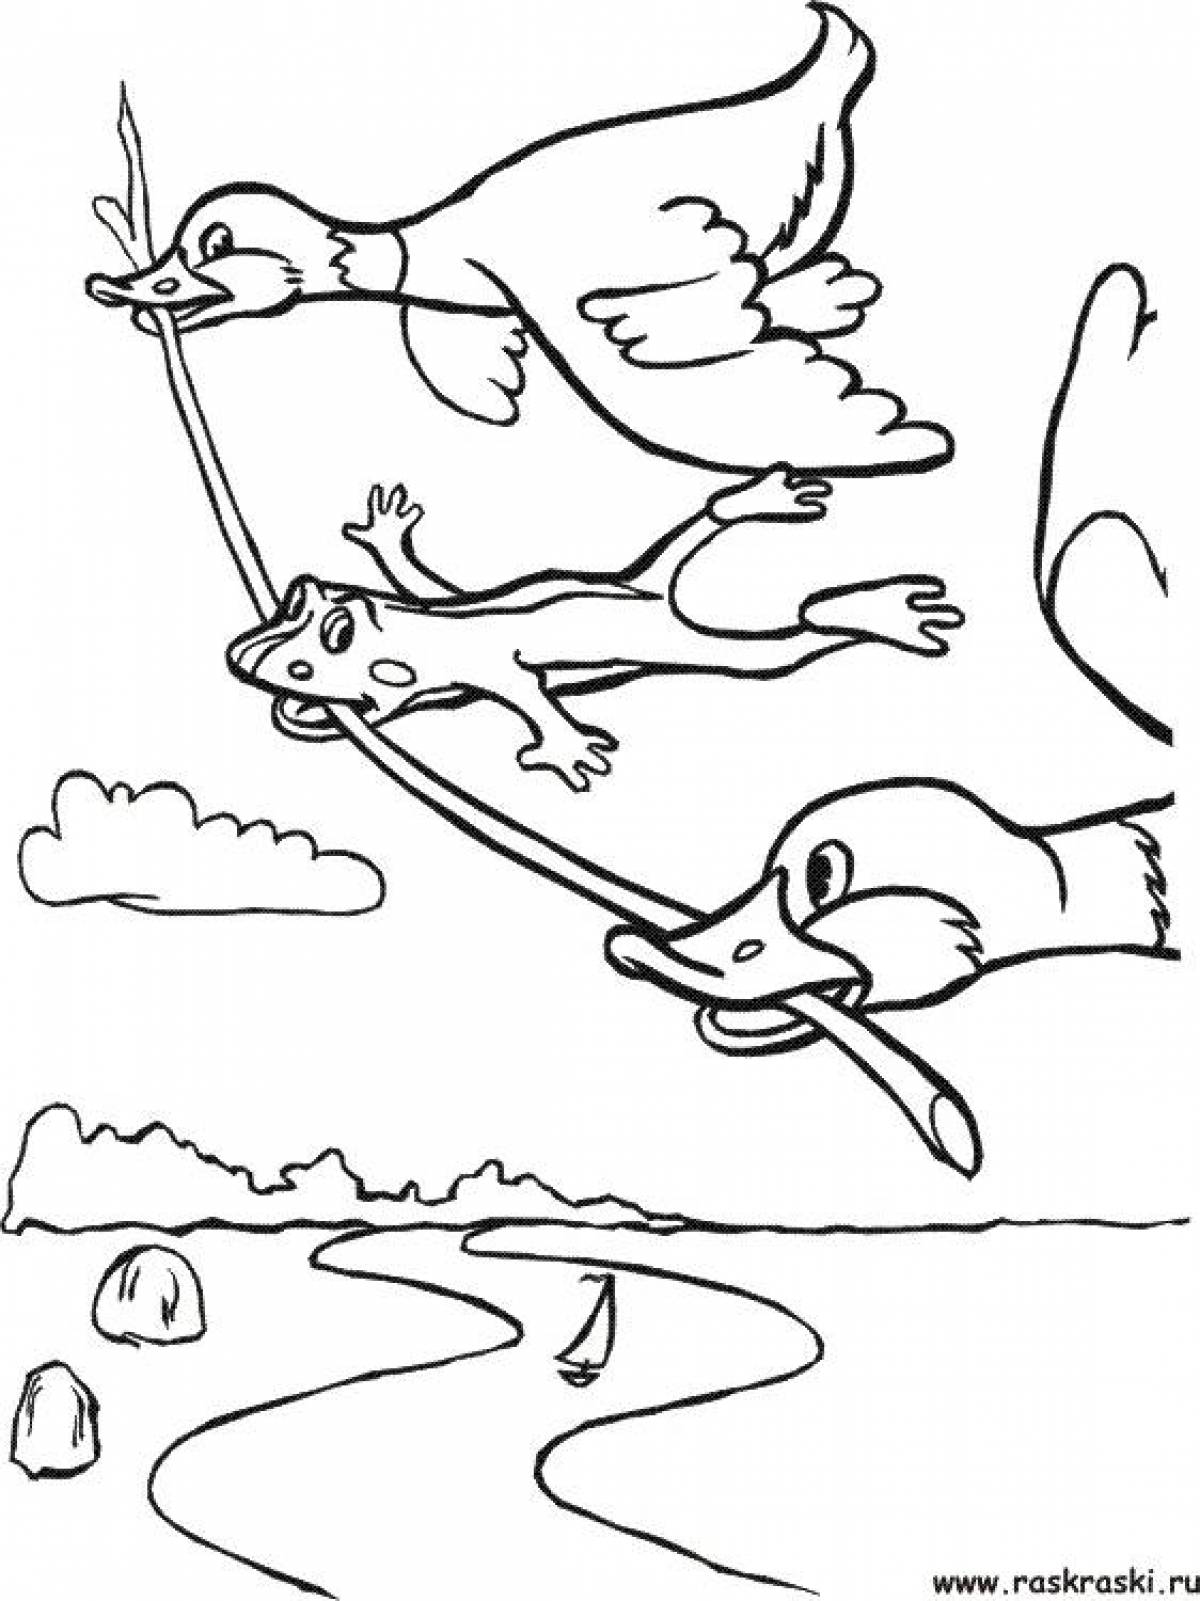 Рисунок к сказке лягушка путешественница 3 класс